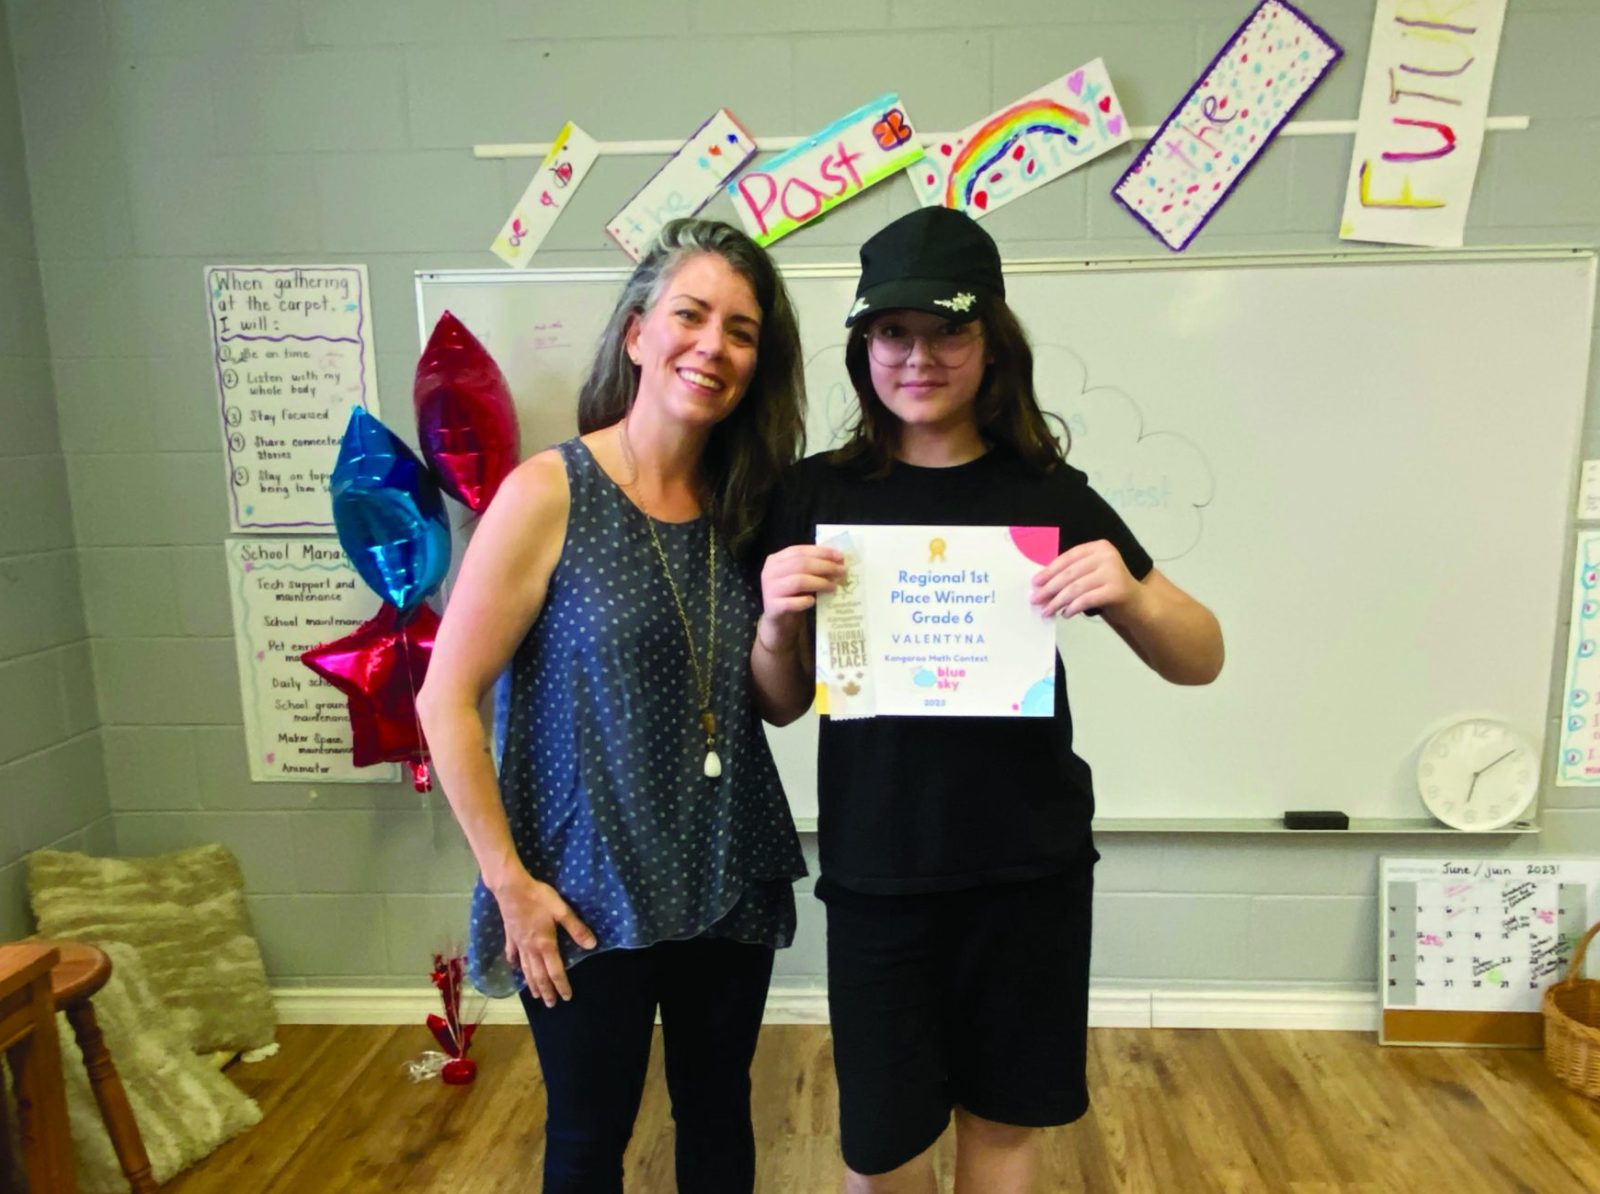 Blue Sky Academy Holds Canada Math Kangaroo Contest